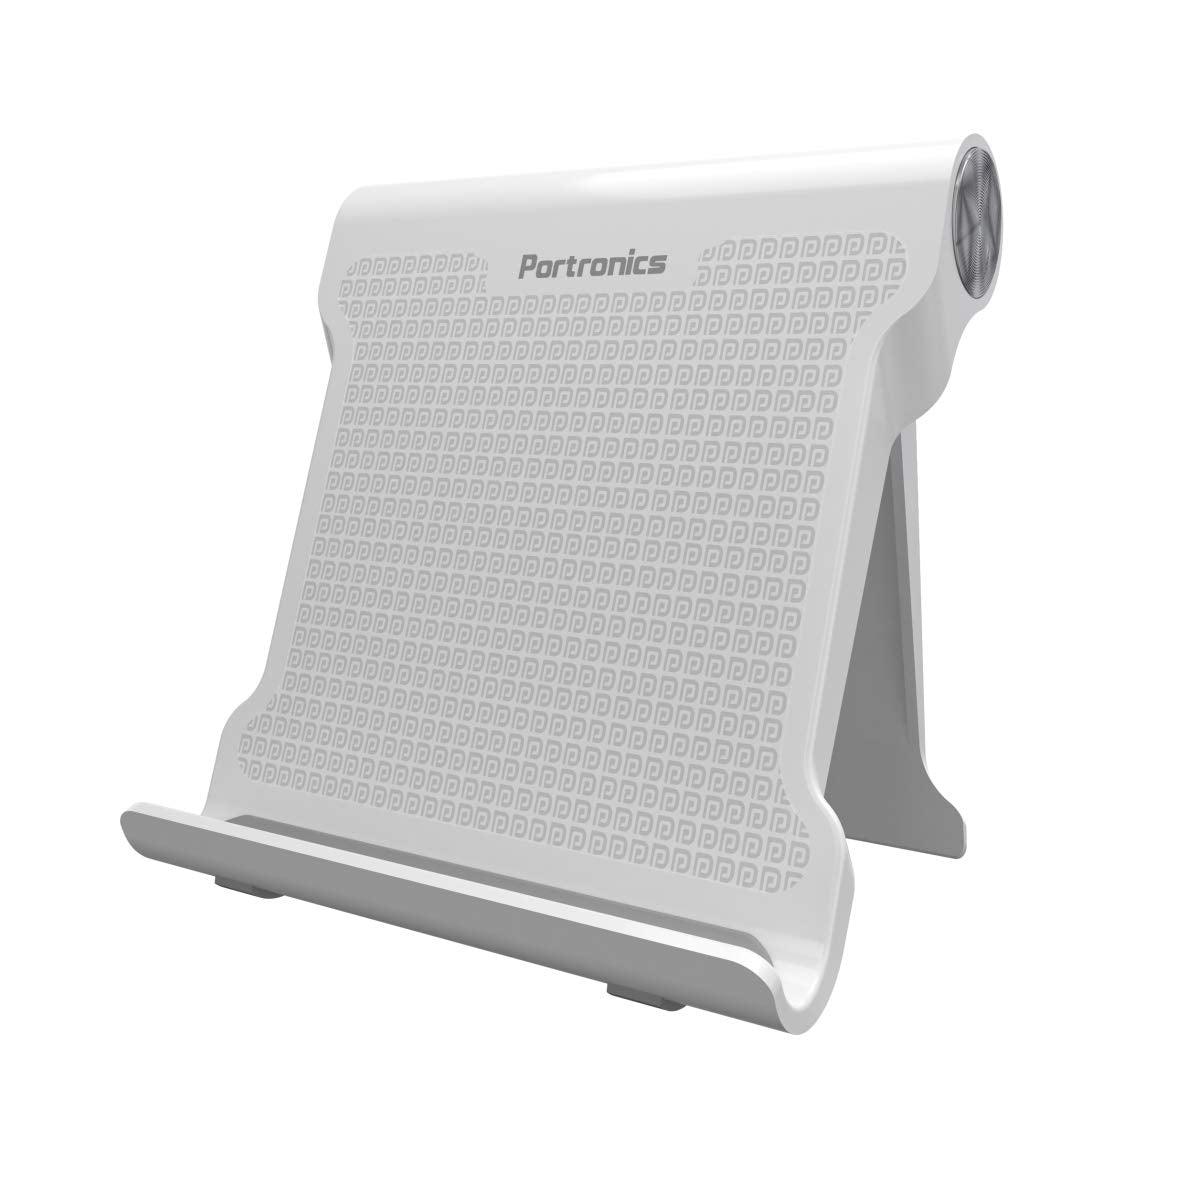 Portronics modesk 200 universal mobile phone tabletop stand (white) - halfpeapp